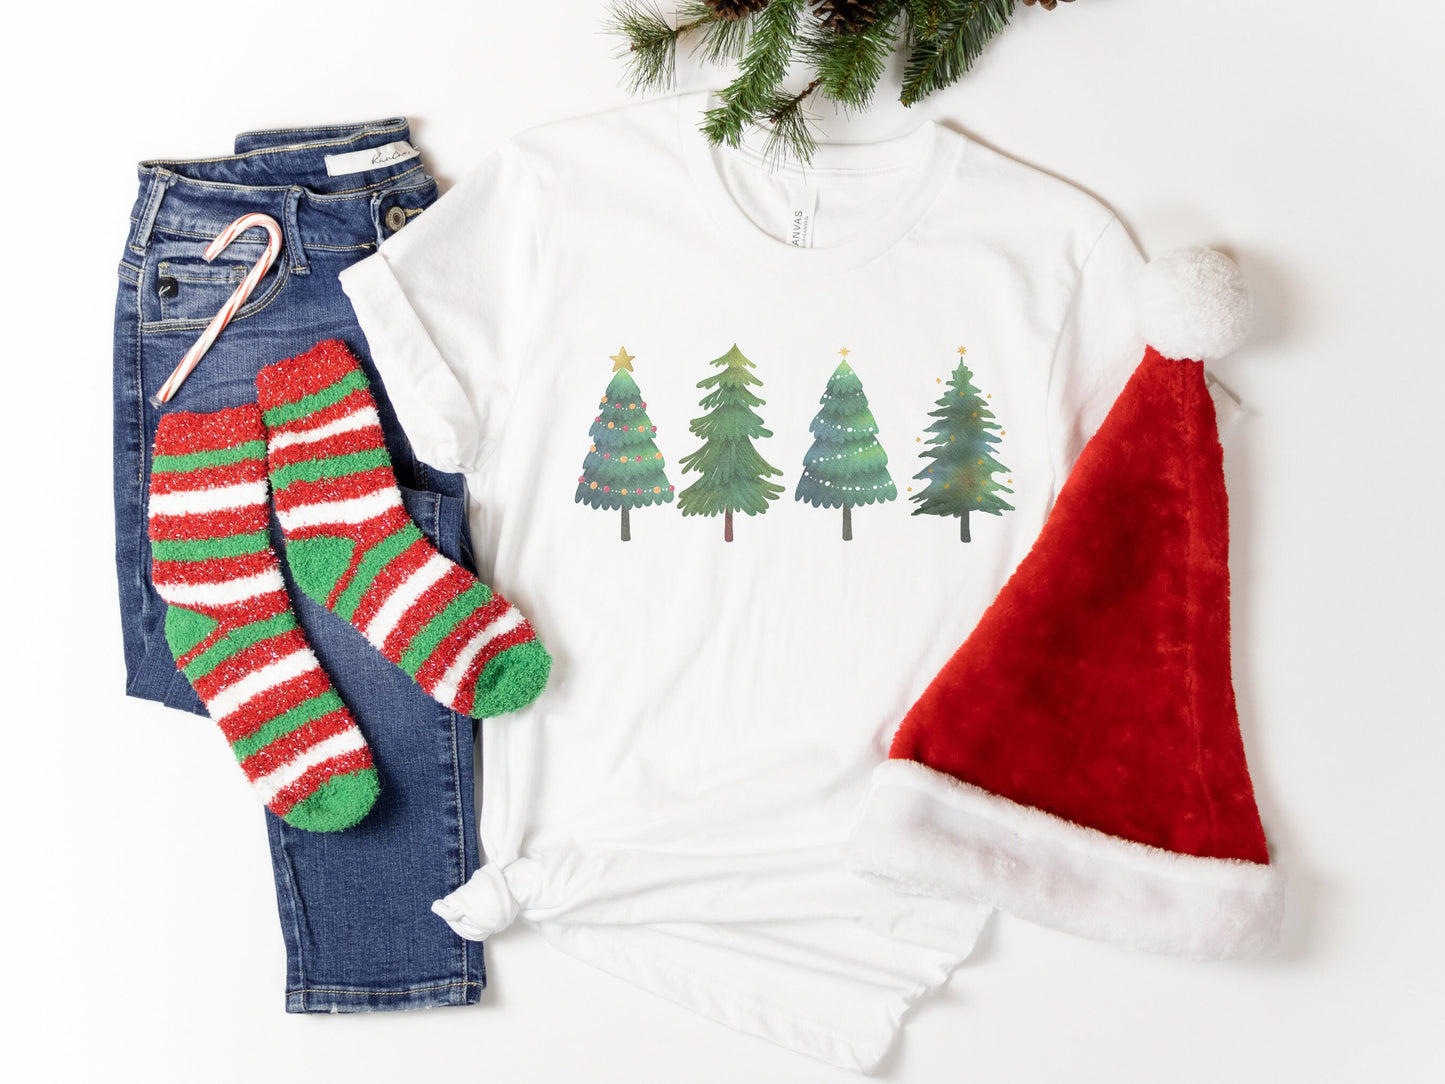 Christmas Trees Shirt, Christmas Shirts for Women, Christmas Tee, Shirts for Christmas, Holiday Tee, Cute Christmas T-Shirt, Holiday Party